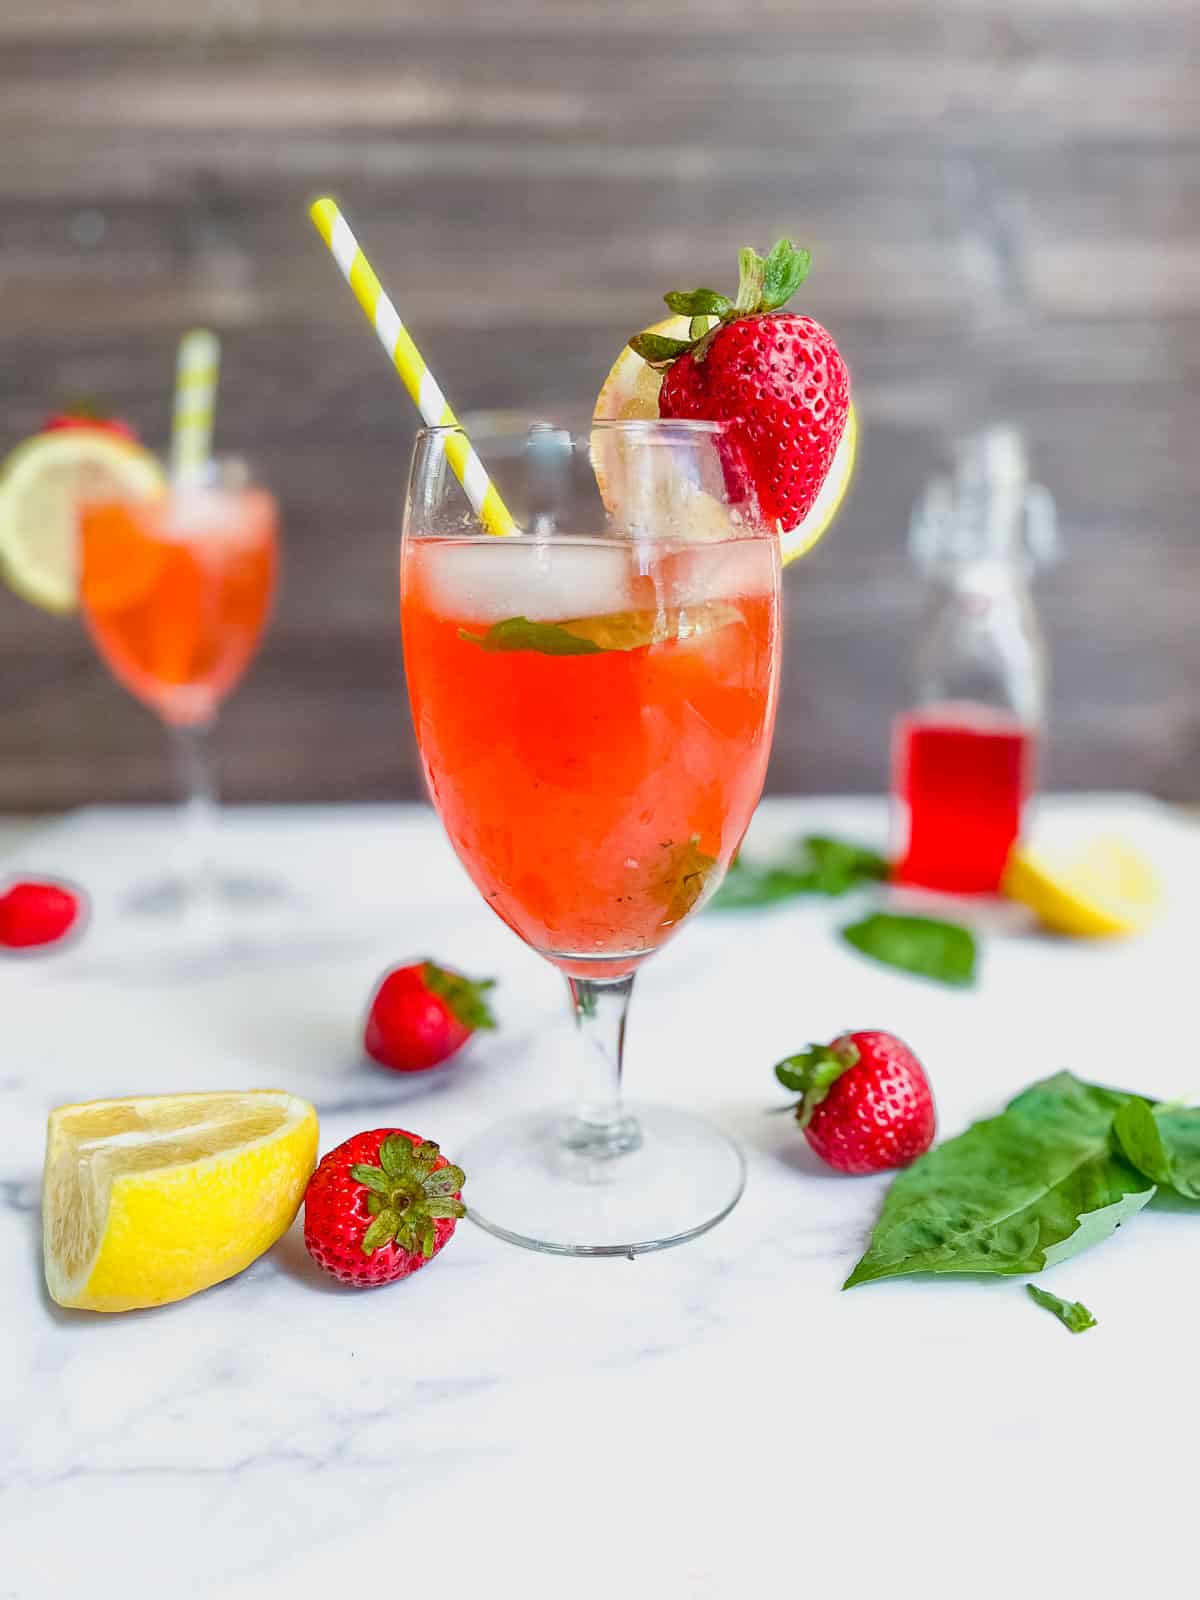 Strawberry basil lemonade drink on table.